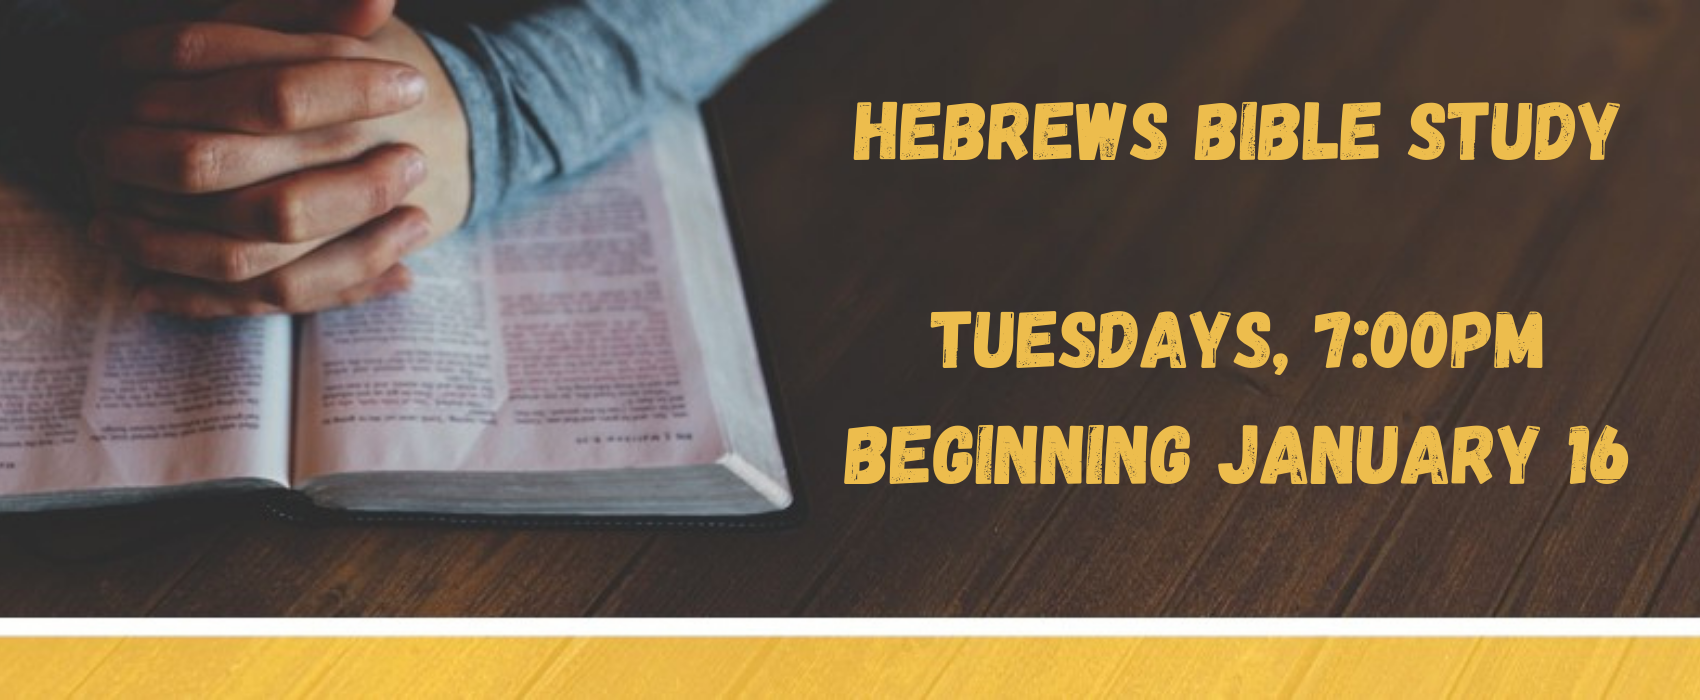 Hebrews Bibe Study.png